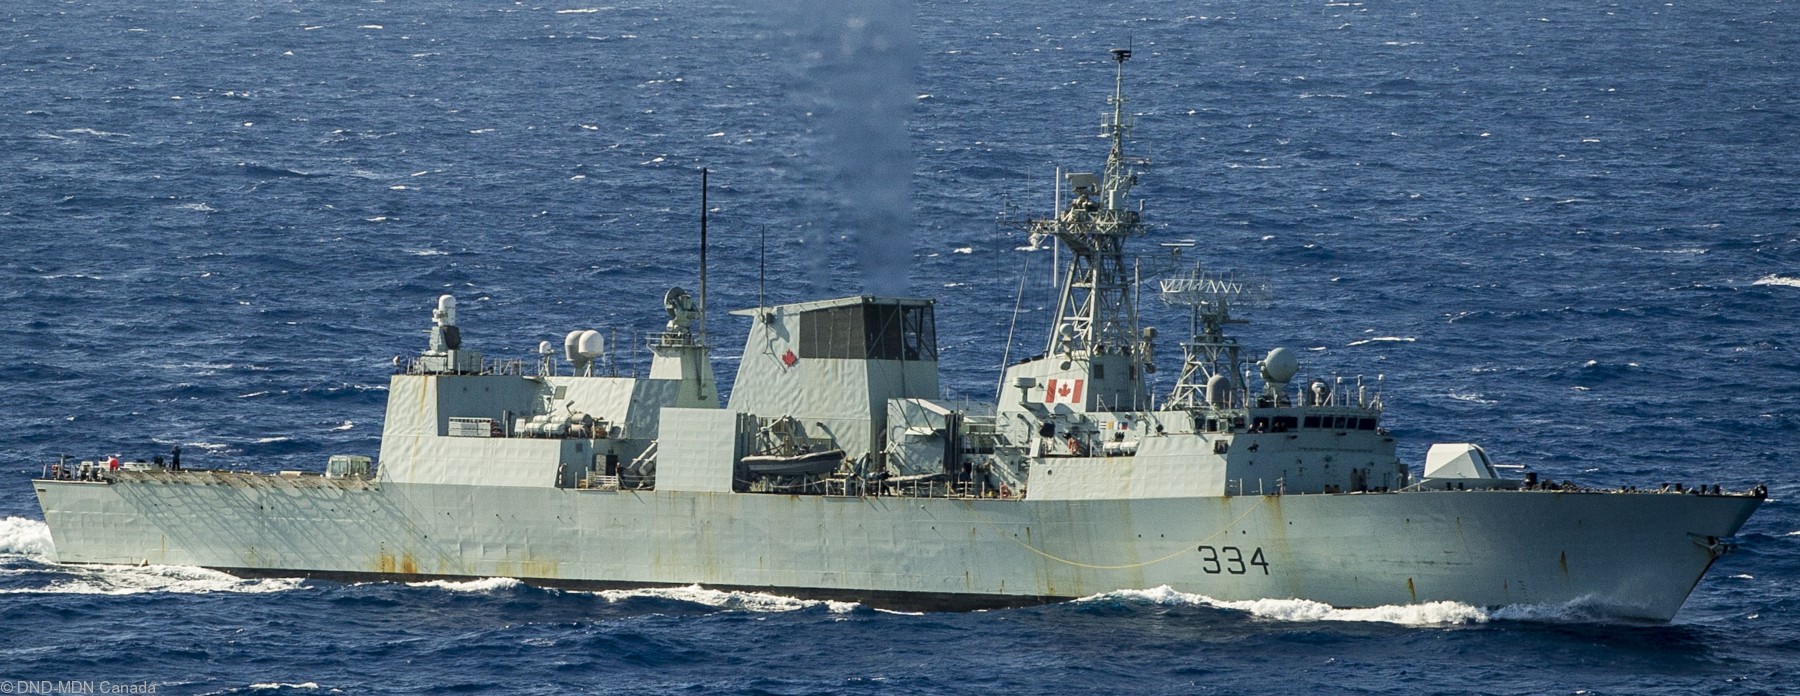 ffh-334 hmcs regina halifax class helicopter patrol frigate ncsm royal canadian navy 72